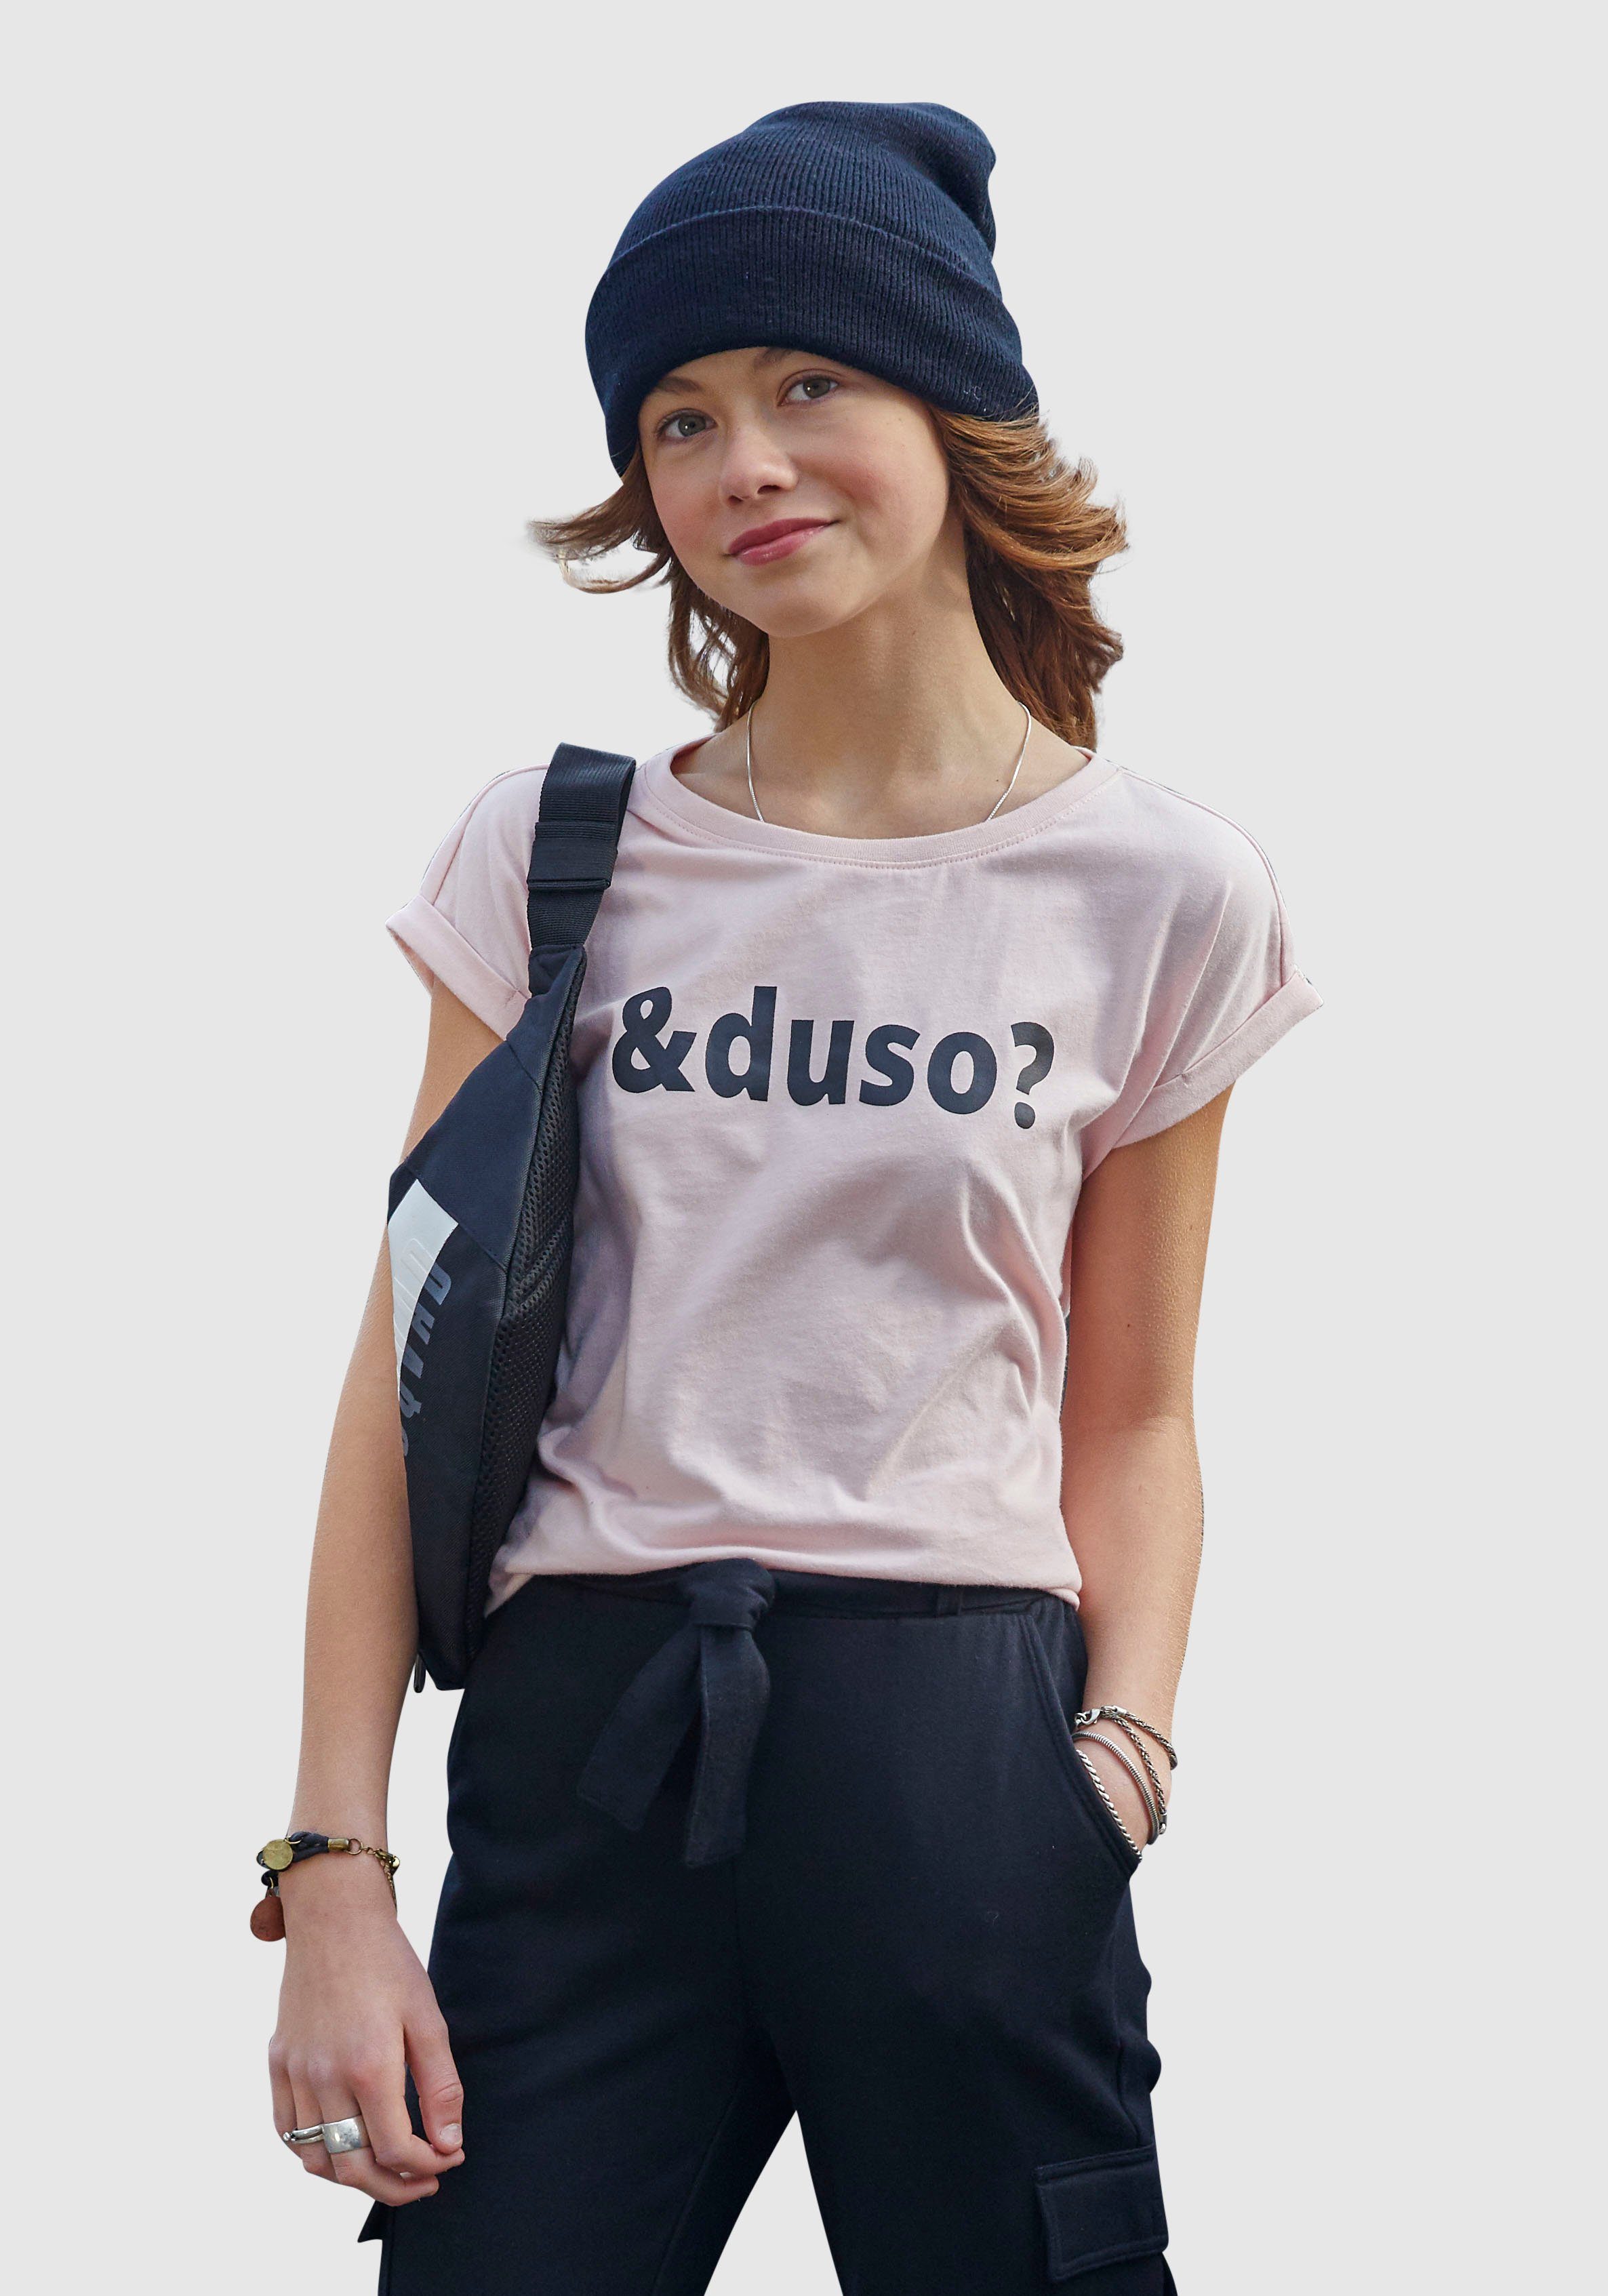 KIDSWORLD T-Shirt &duso? in bequemer Passform